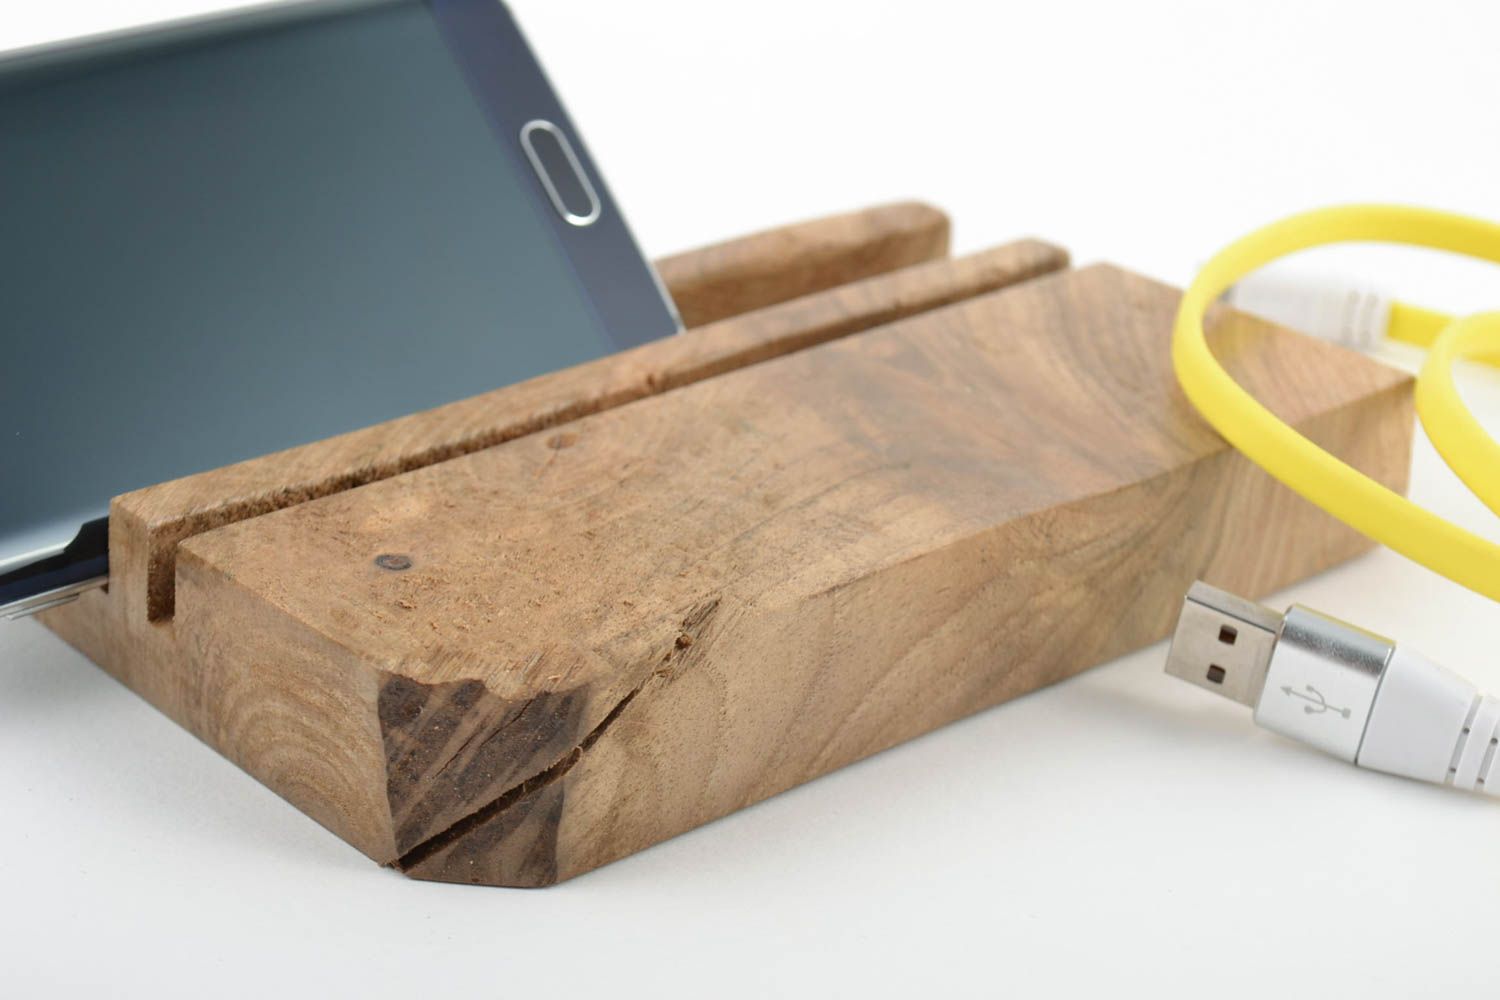 Holz Tablet Halter öko rein Designer handmade Accessoire für Gadgets foto 1